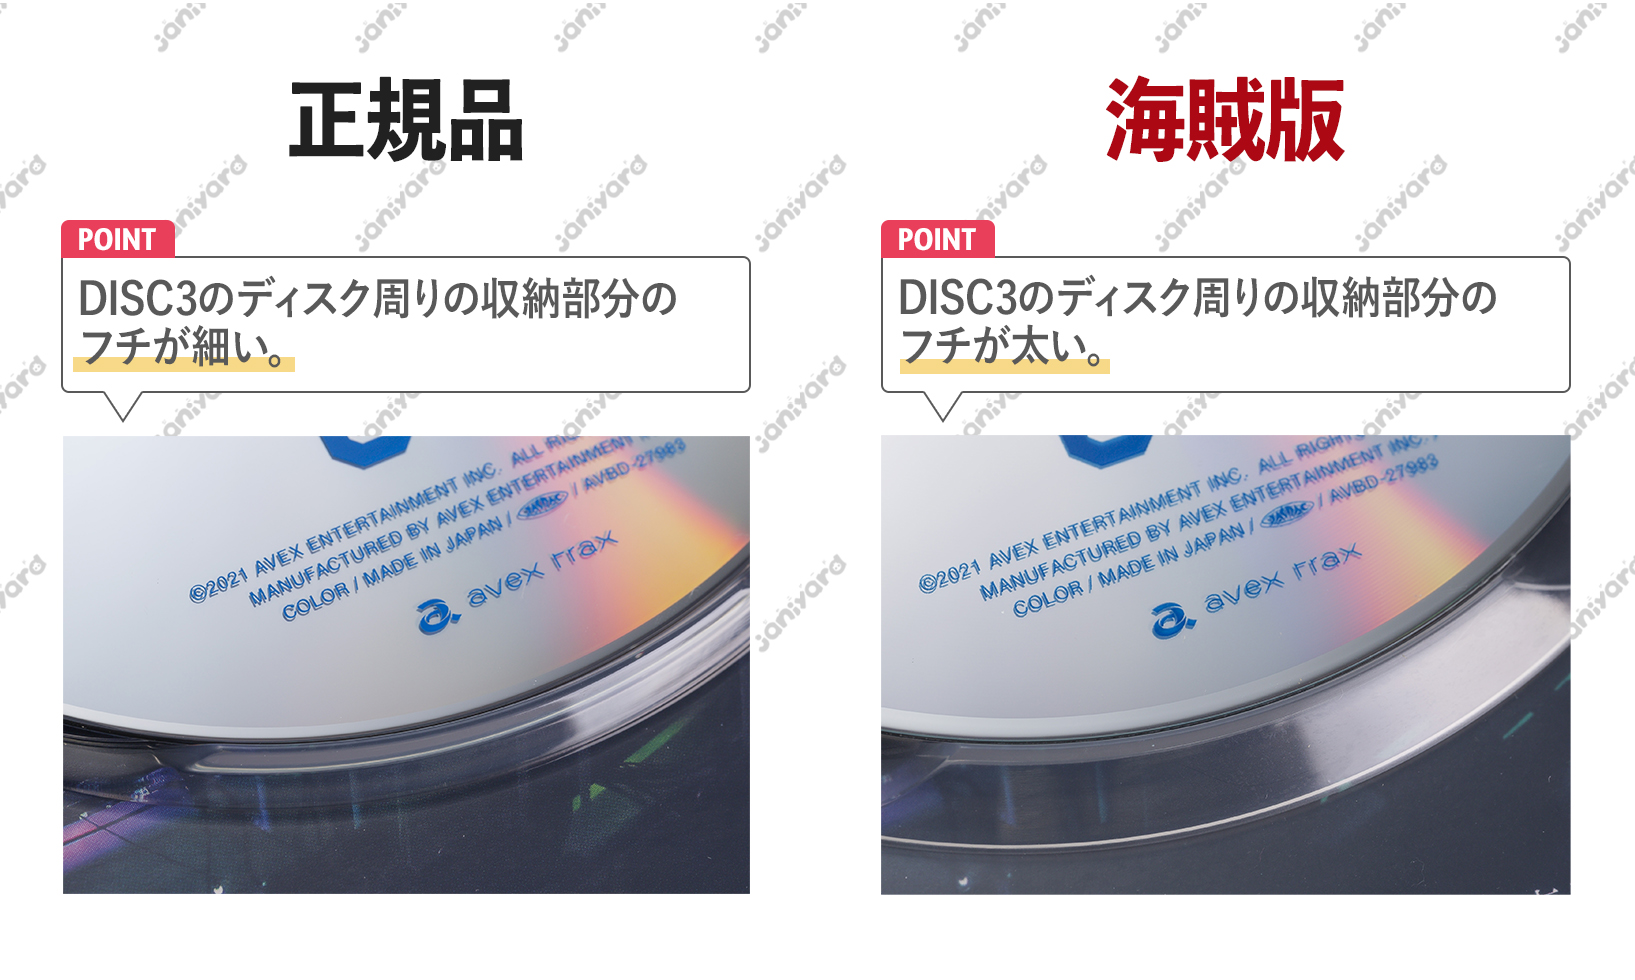 海賊版：Snow Man DVD ASIA TOUR 2D.2D. 通常盤(初回仕様) │ ジャニヤード公式